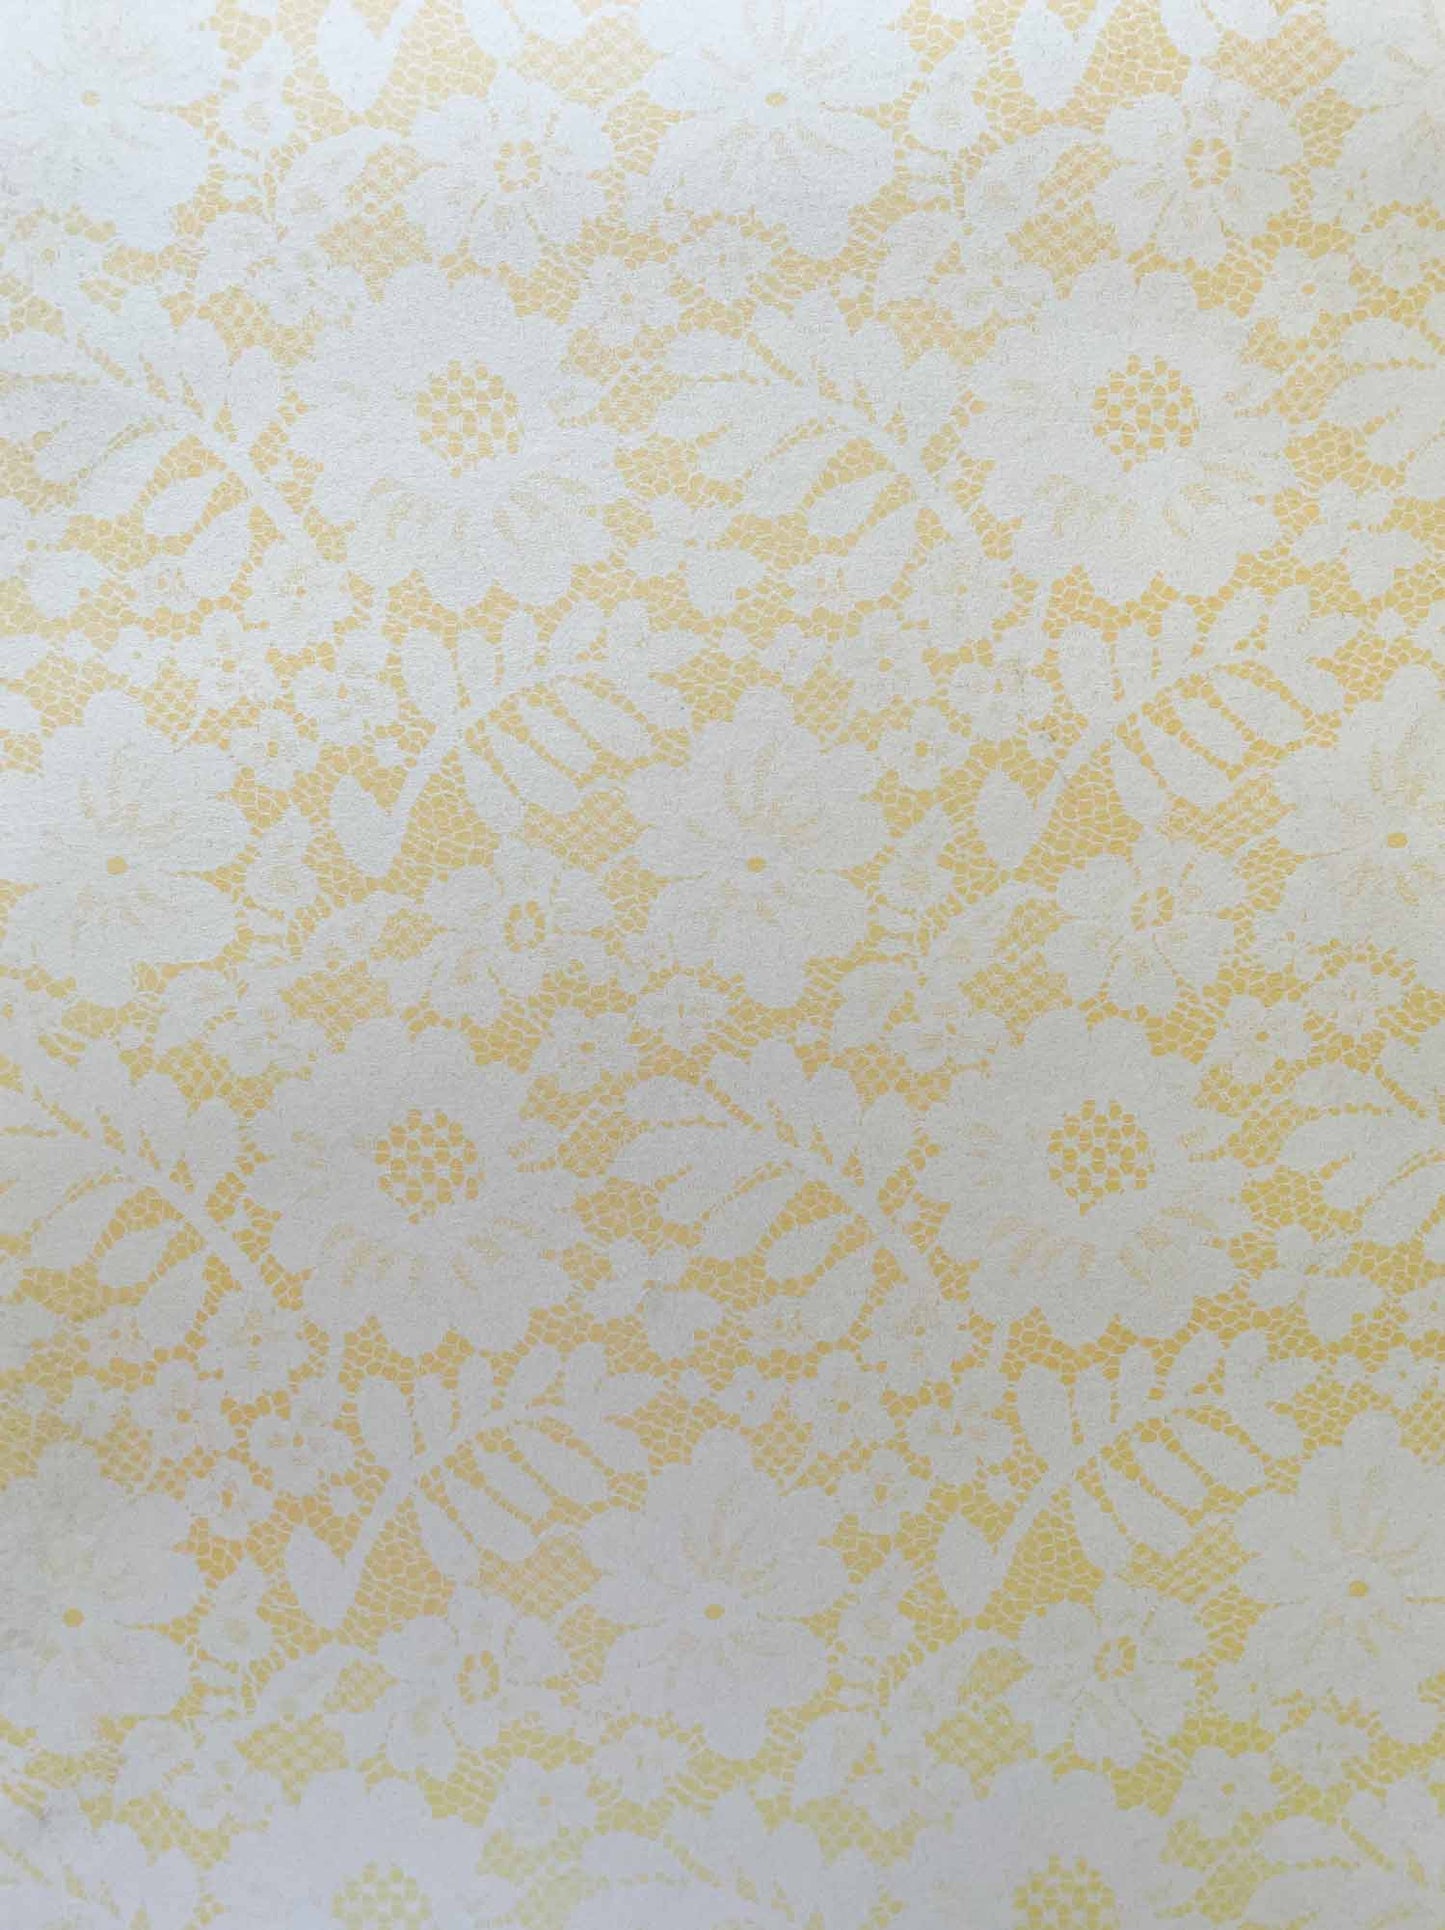 light-peach-lace-pattern-paper